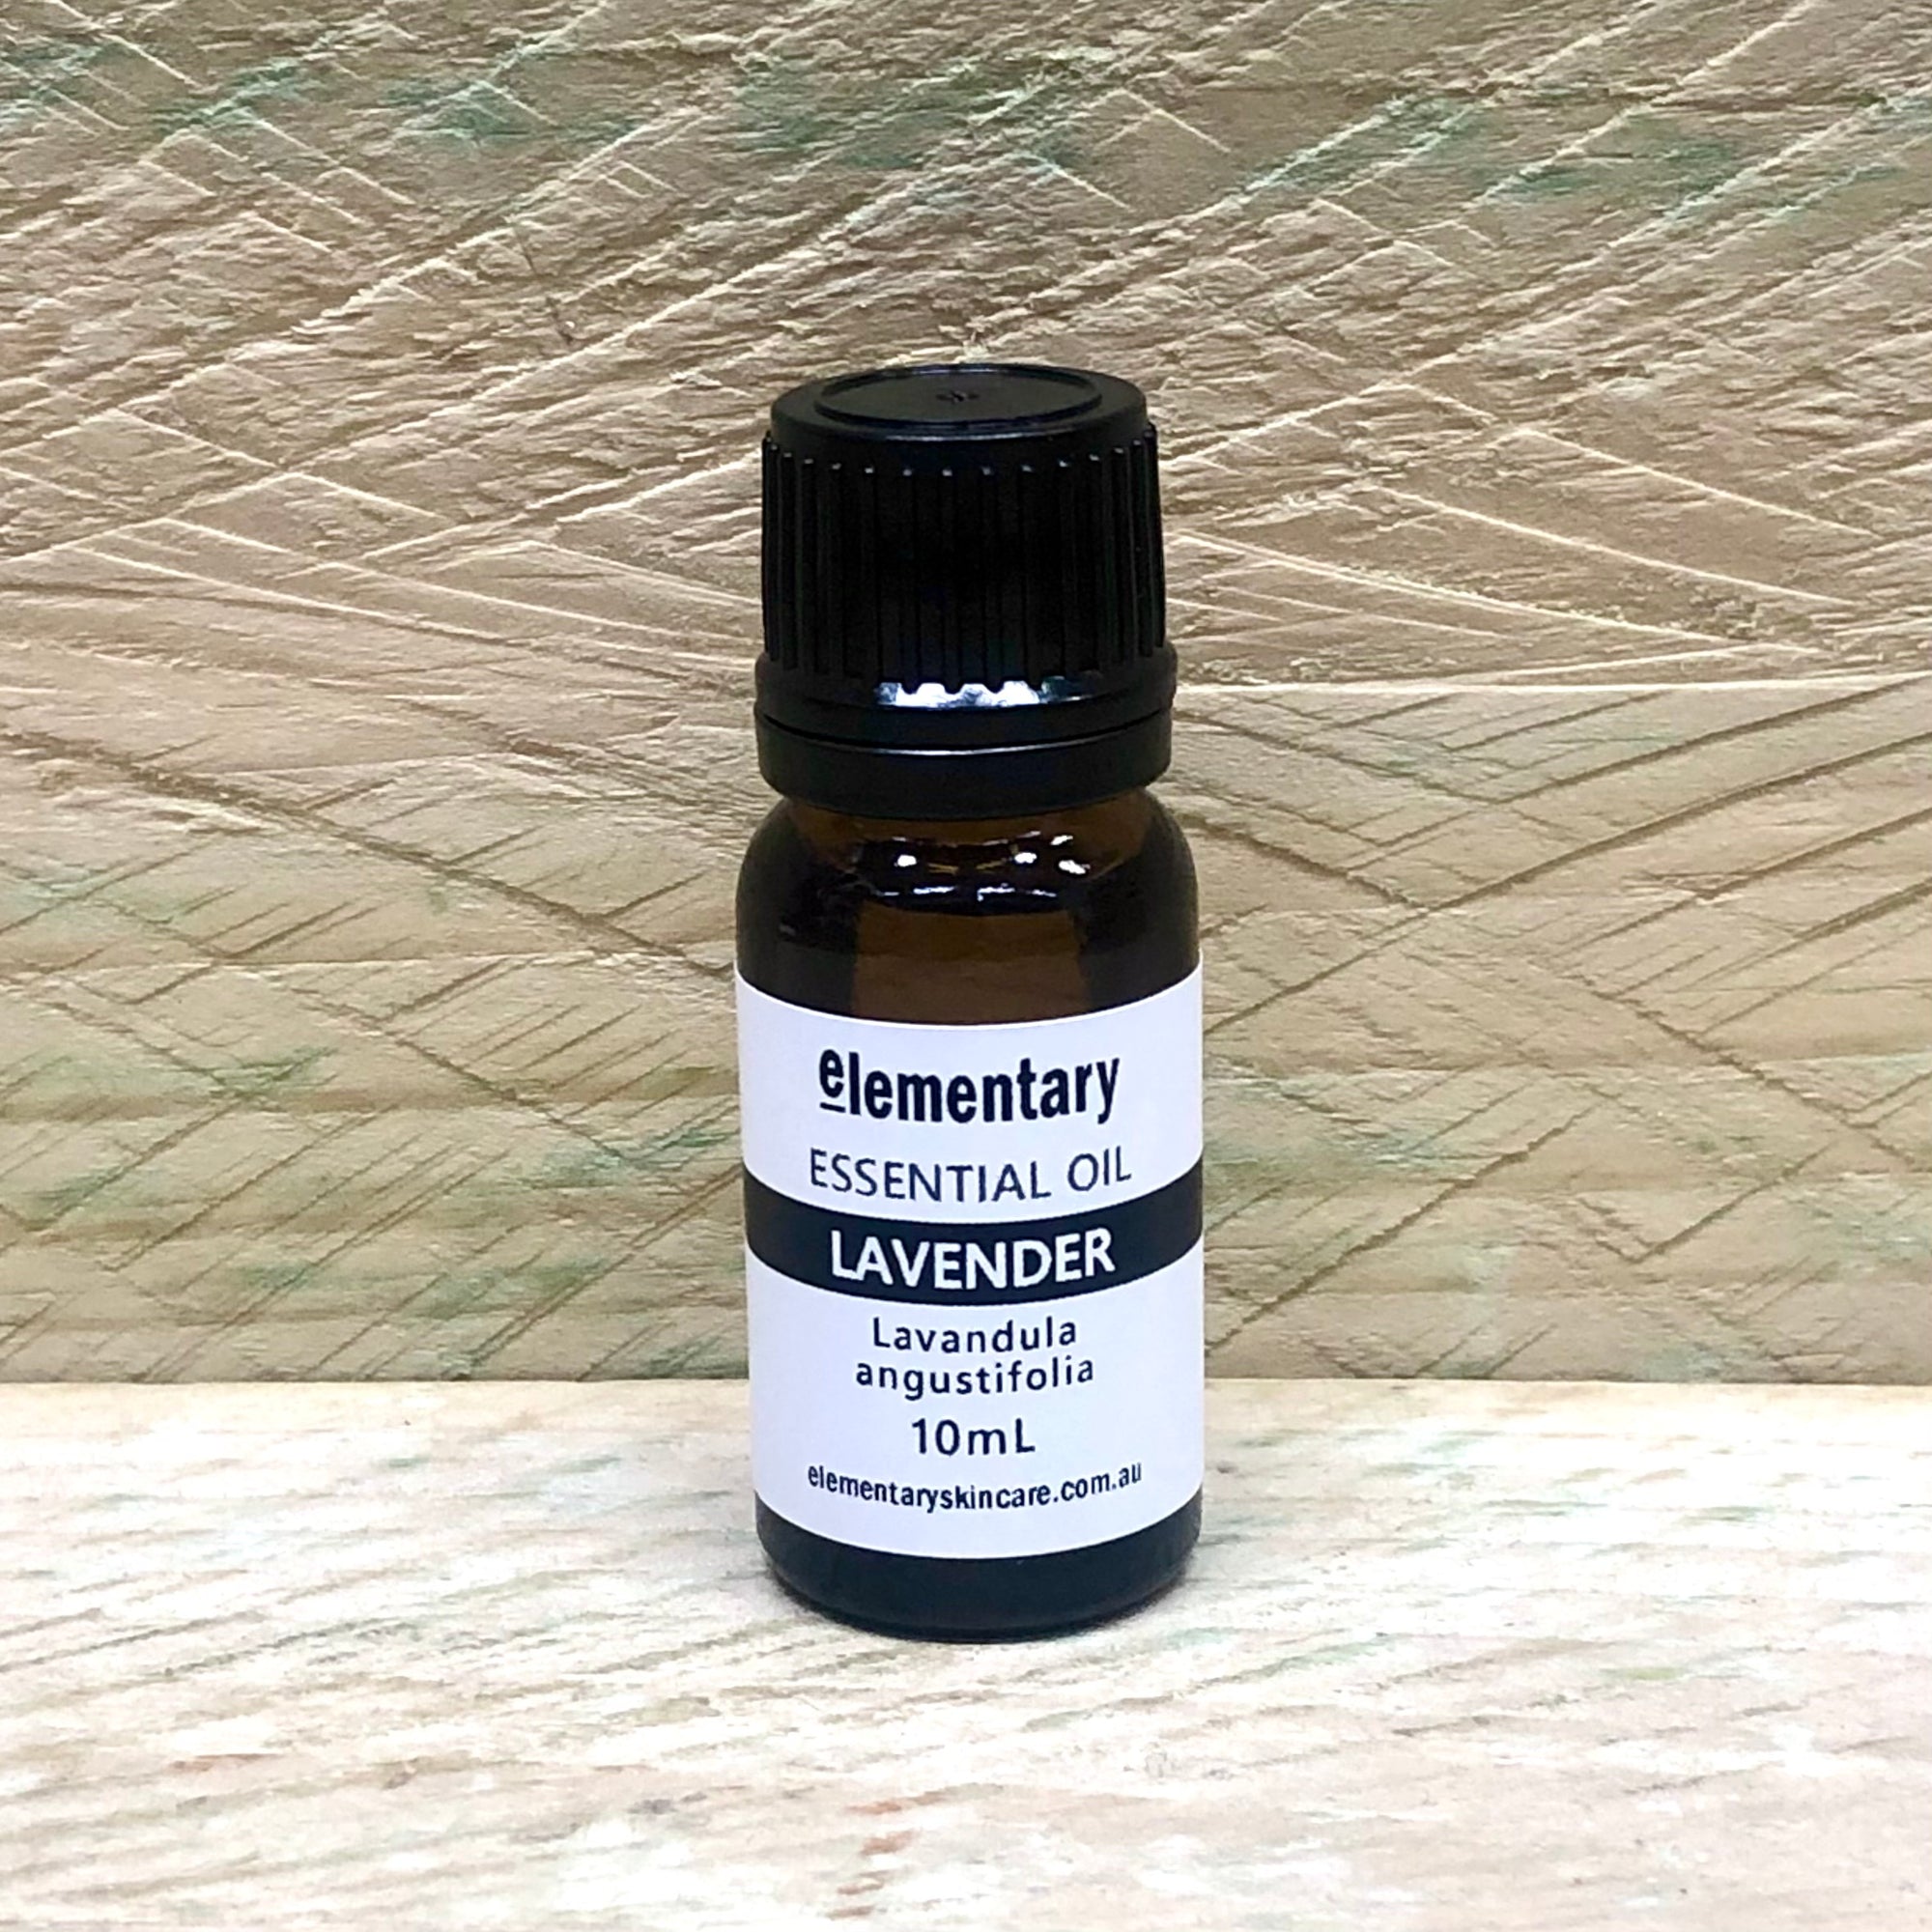 Elementary essential oil Lavender